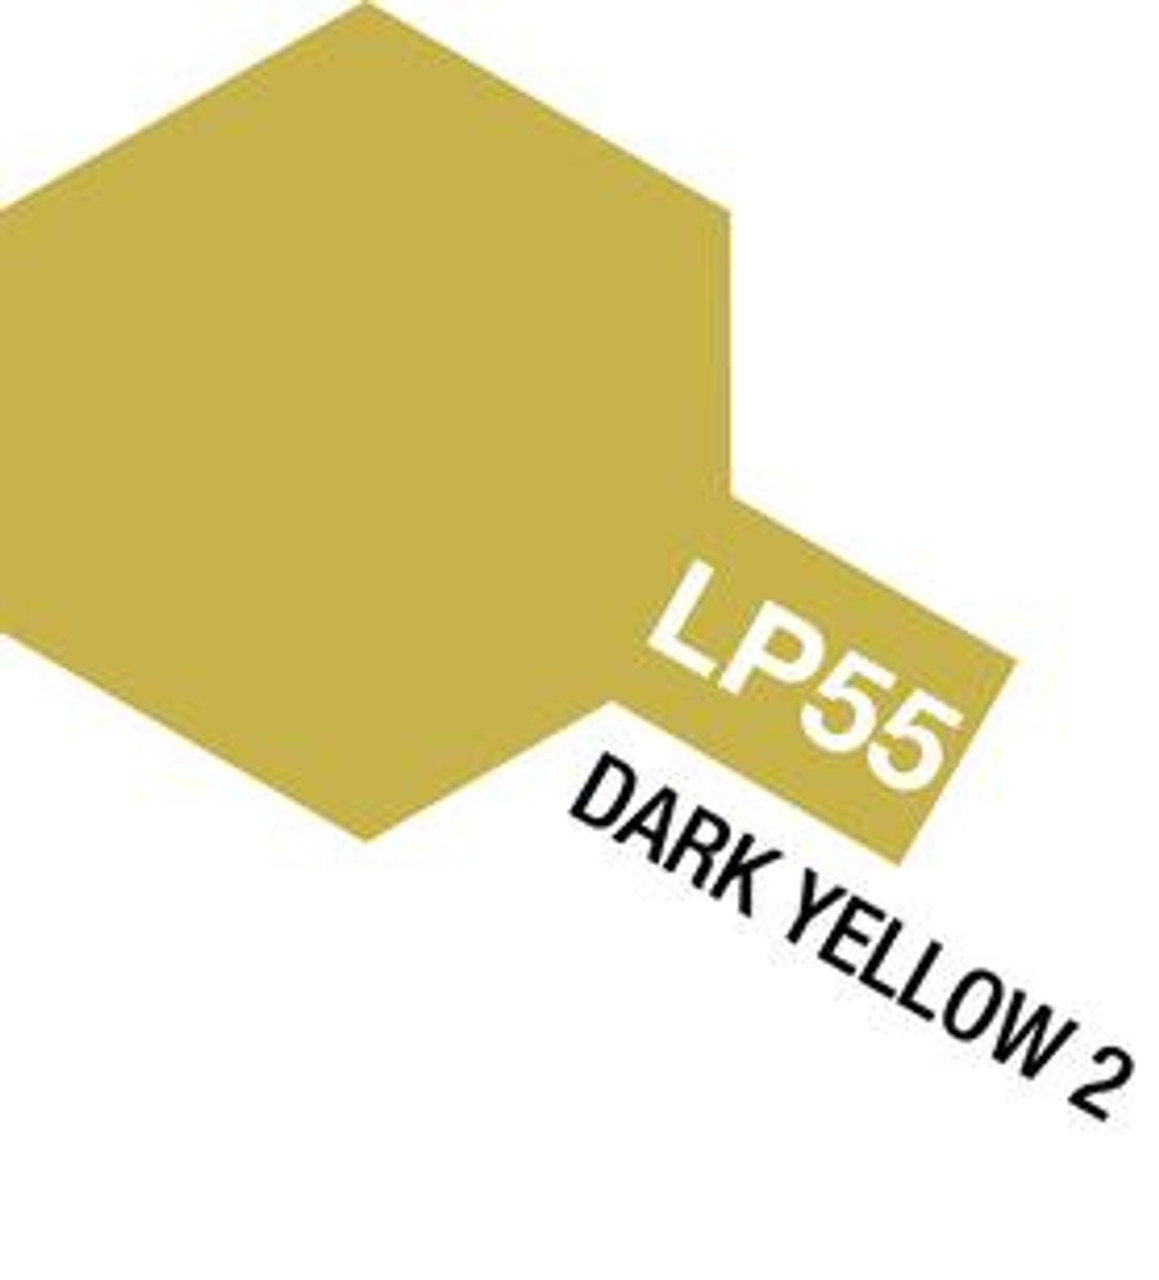 Tamiya 82155 Lacquer Paint LP-55 Dark Yellow 2 model paint 10 ML bottle at MRS Hobby Shop Sandy, Utah, 84070